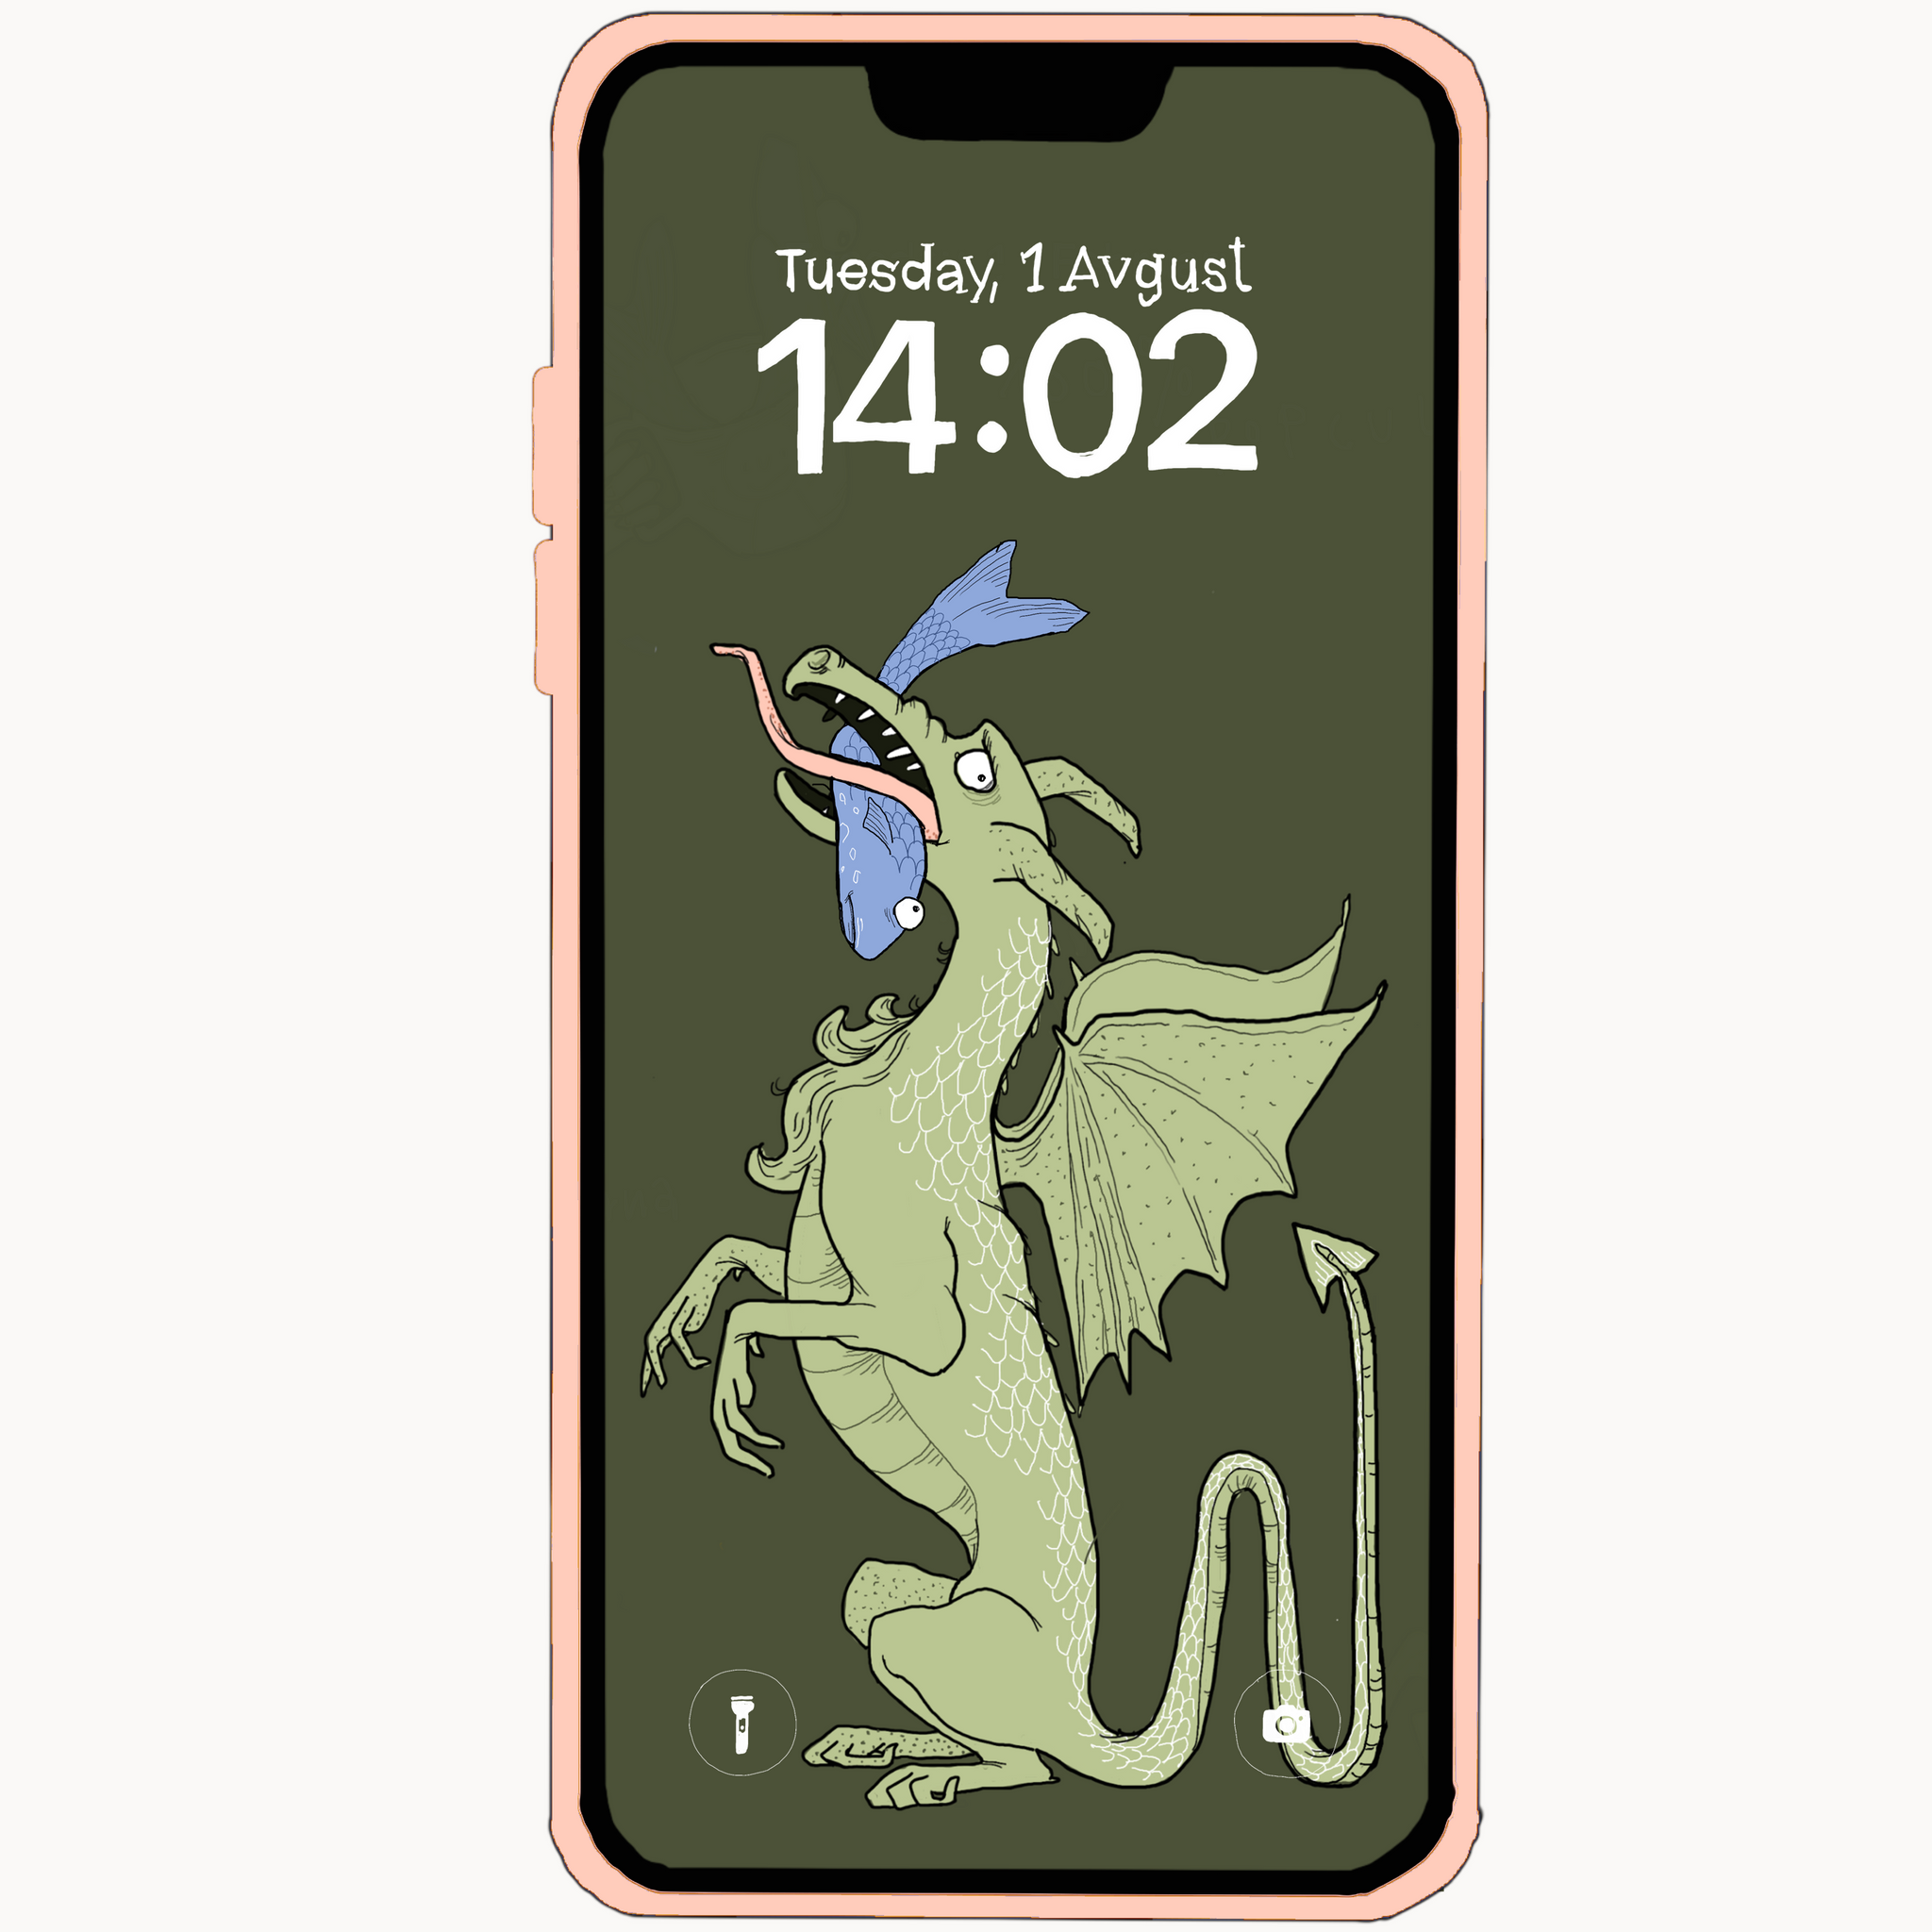 The Ljubljana dragon, PolonaPolona x IKA, wallpaper